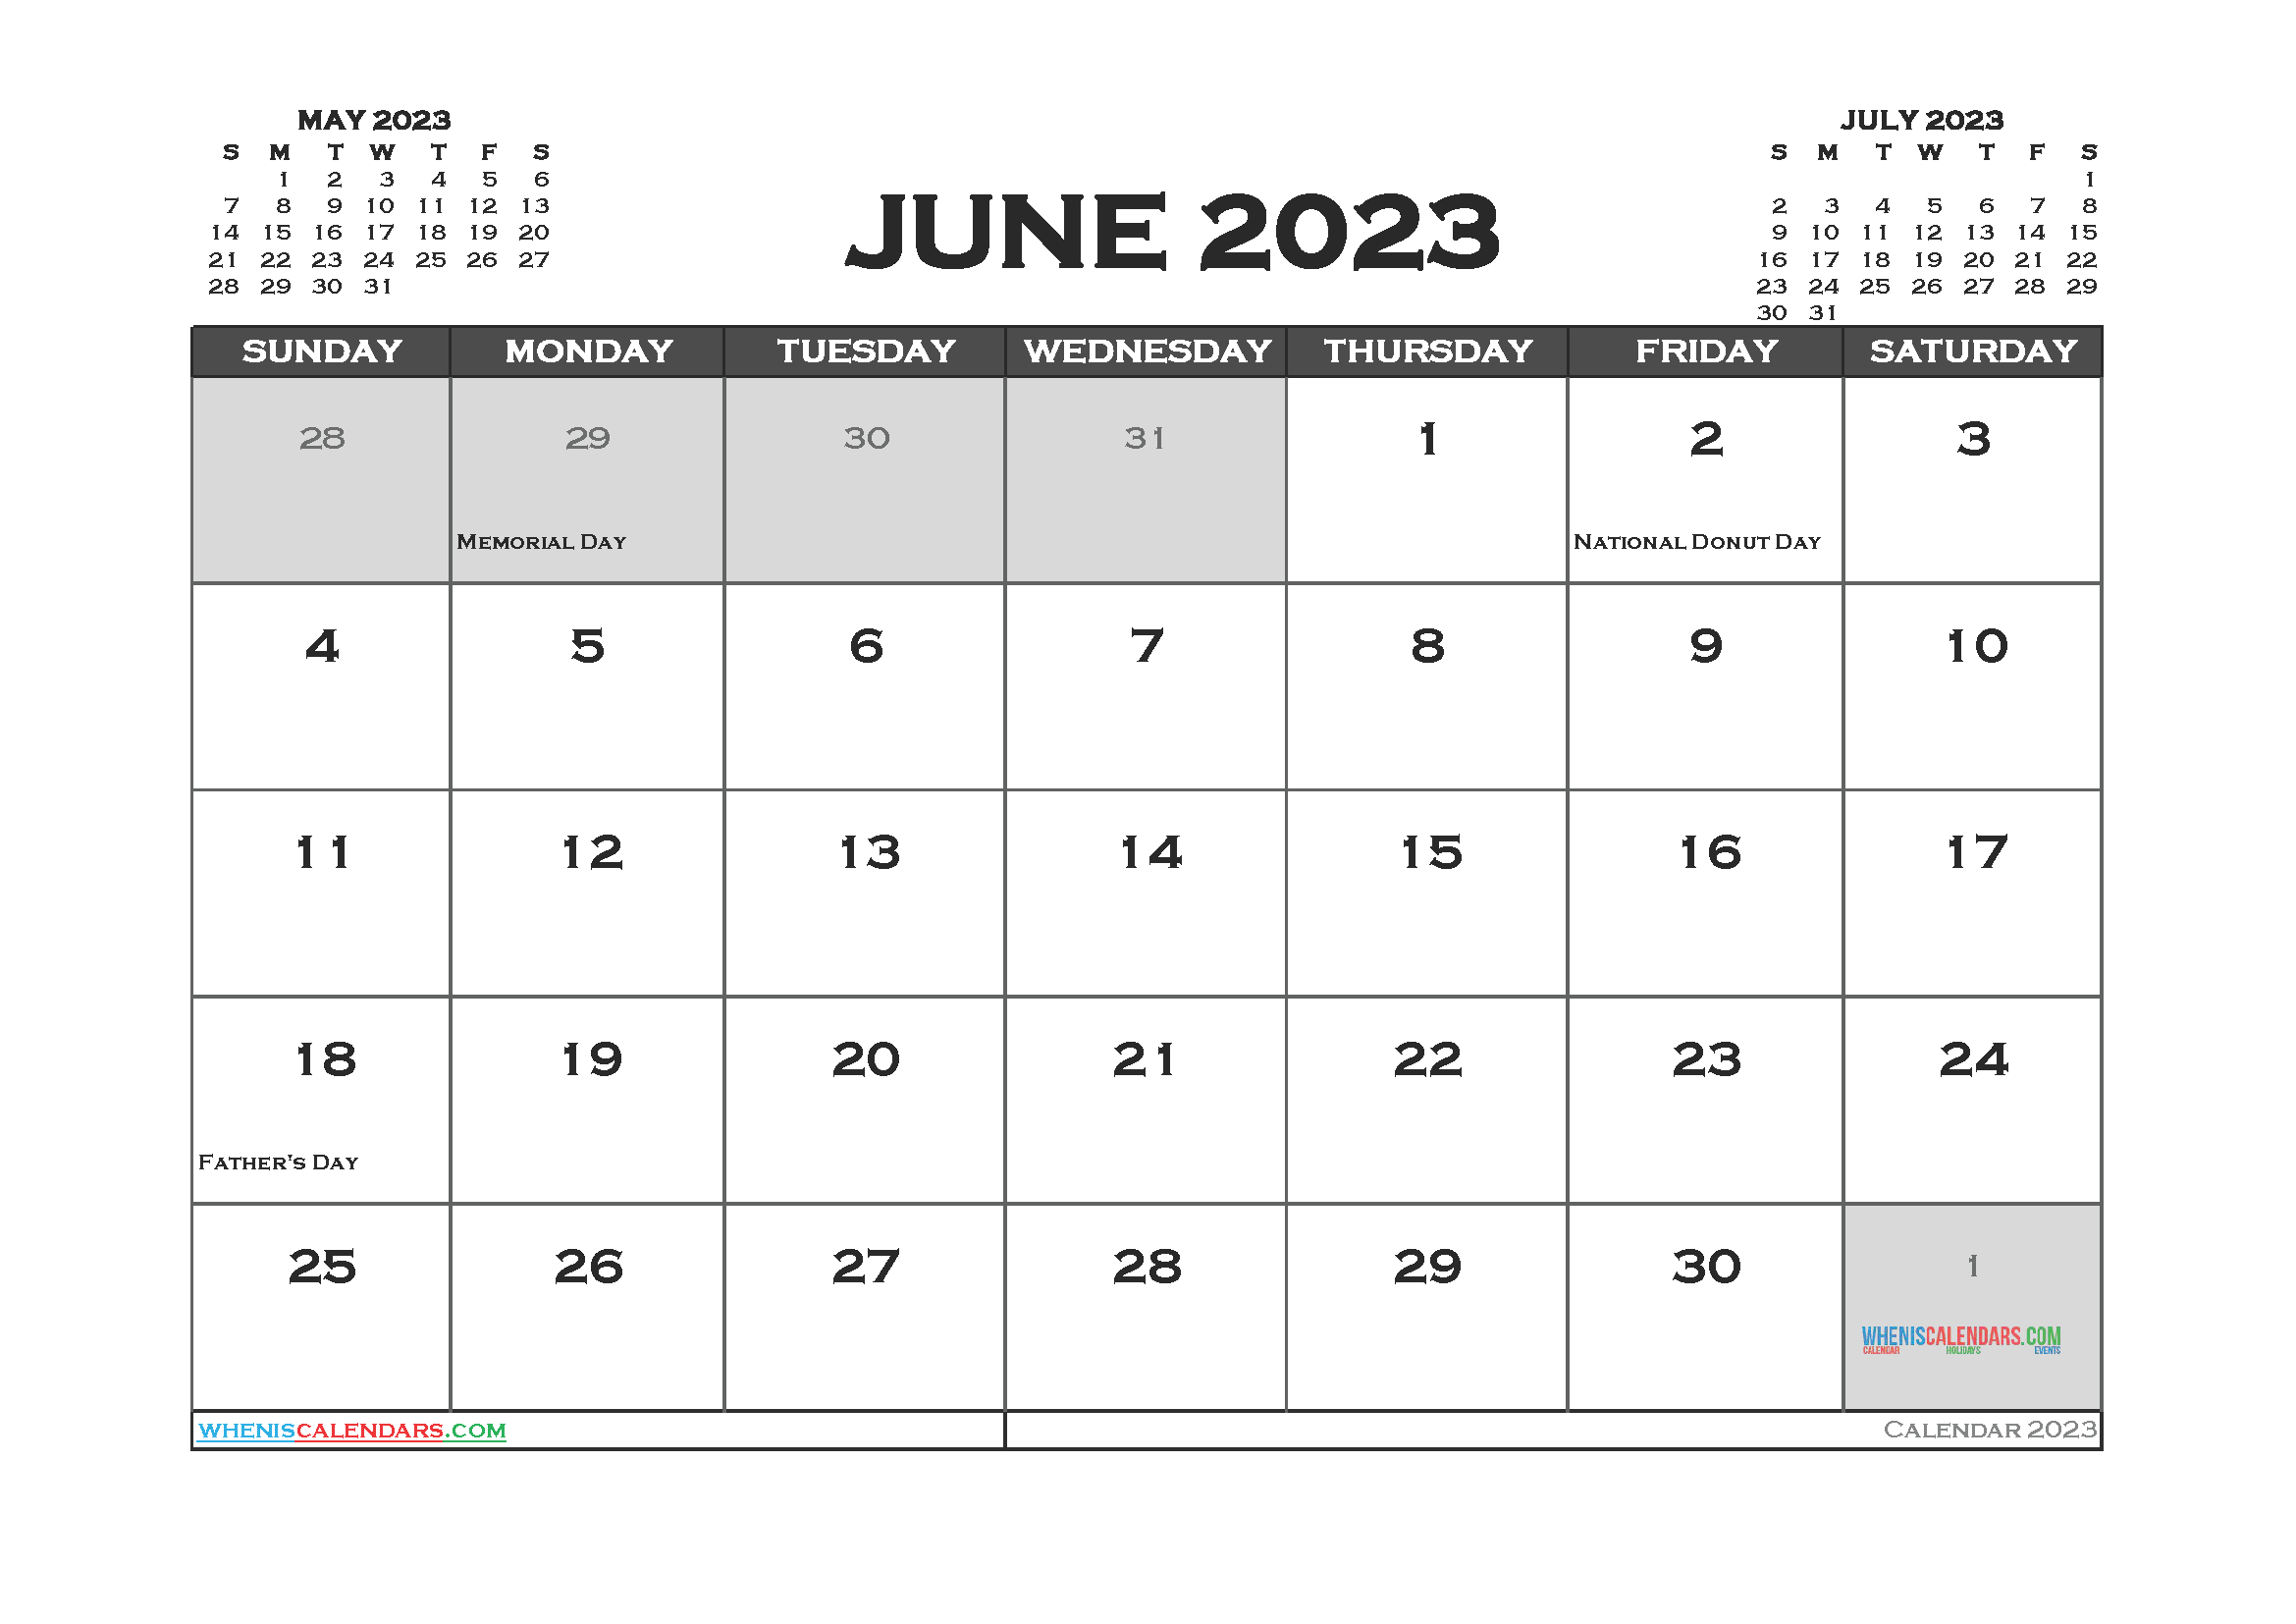 Cute June 2023 Calendar Pdf And Image